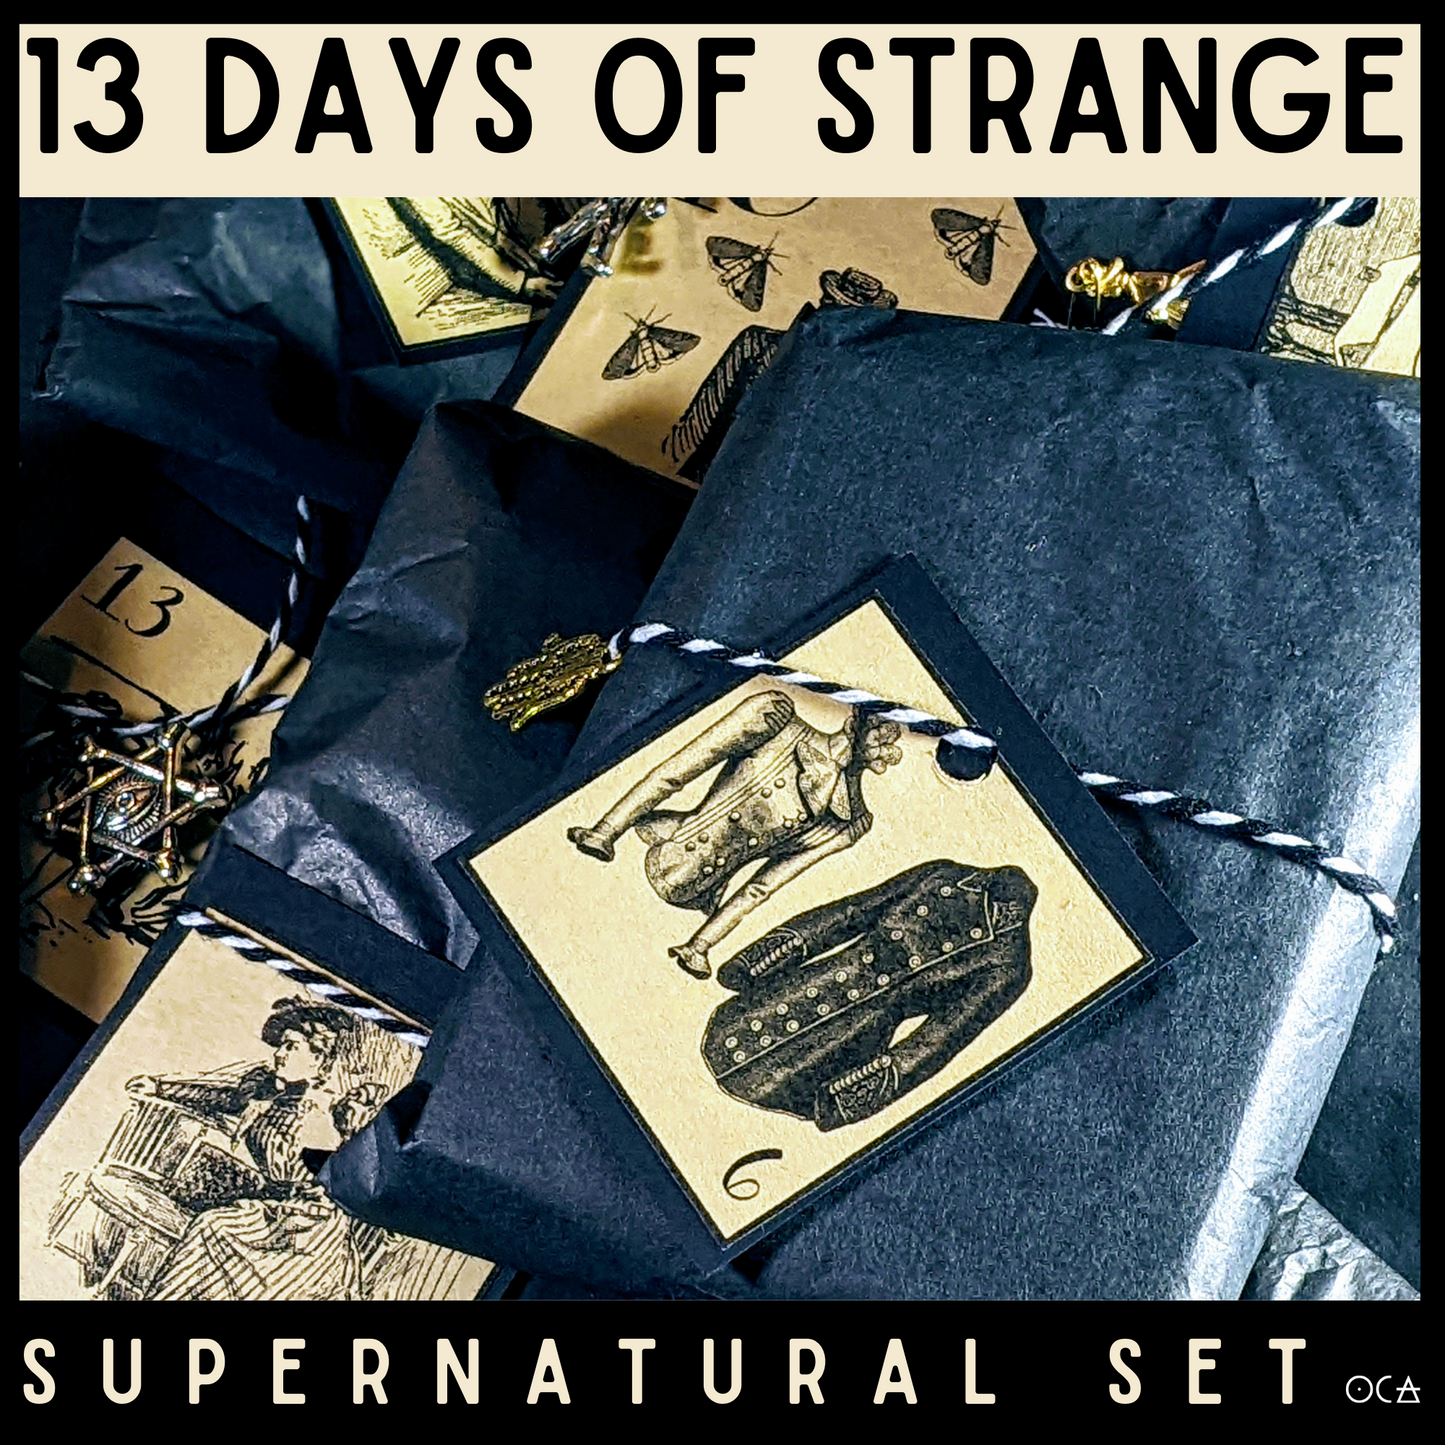 Paranormal Pack/Supernatural Set/Strange Surprises (7 Day or 13 Day Countdown)